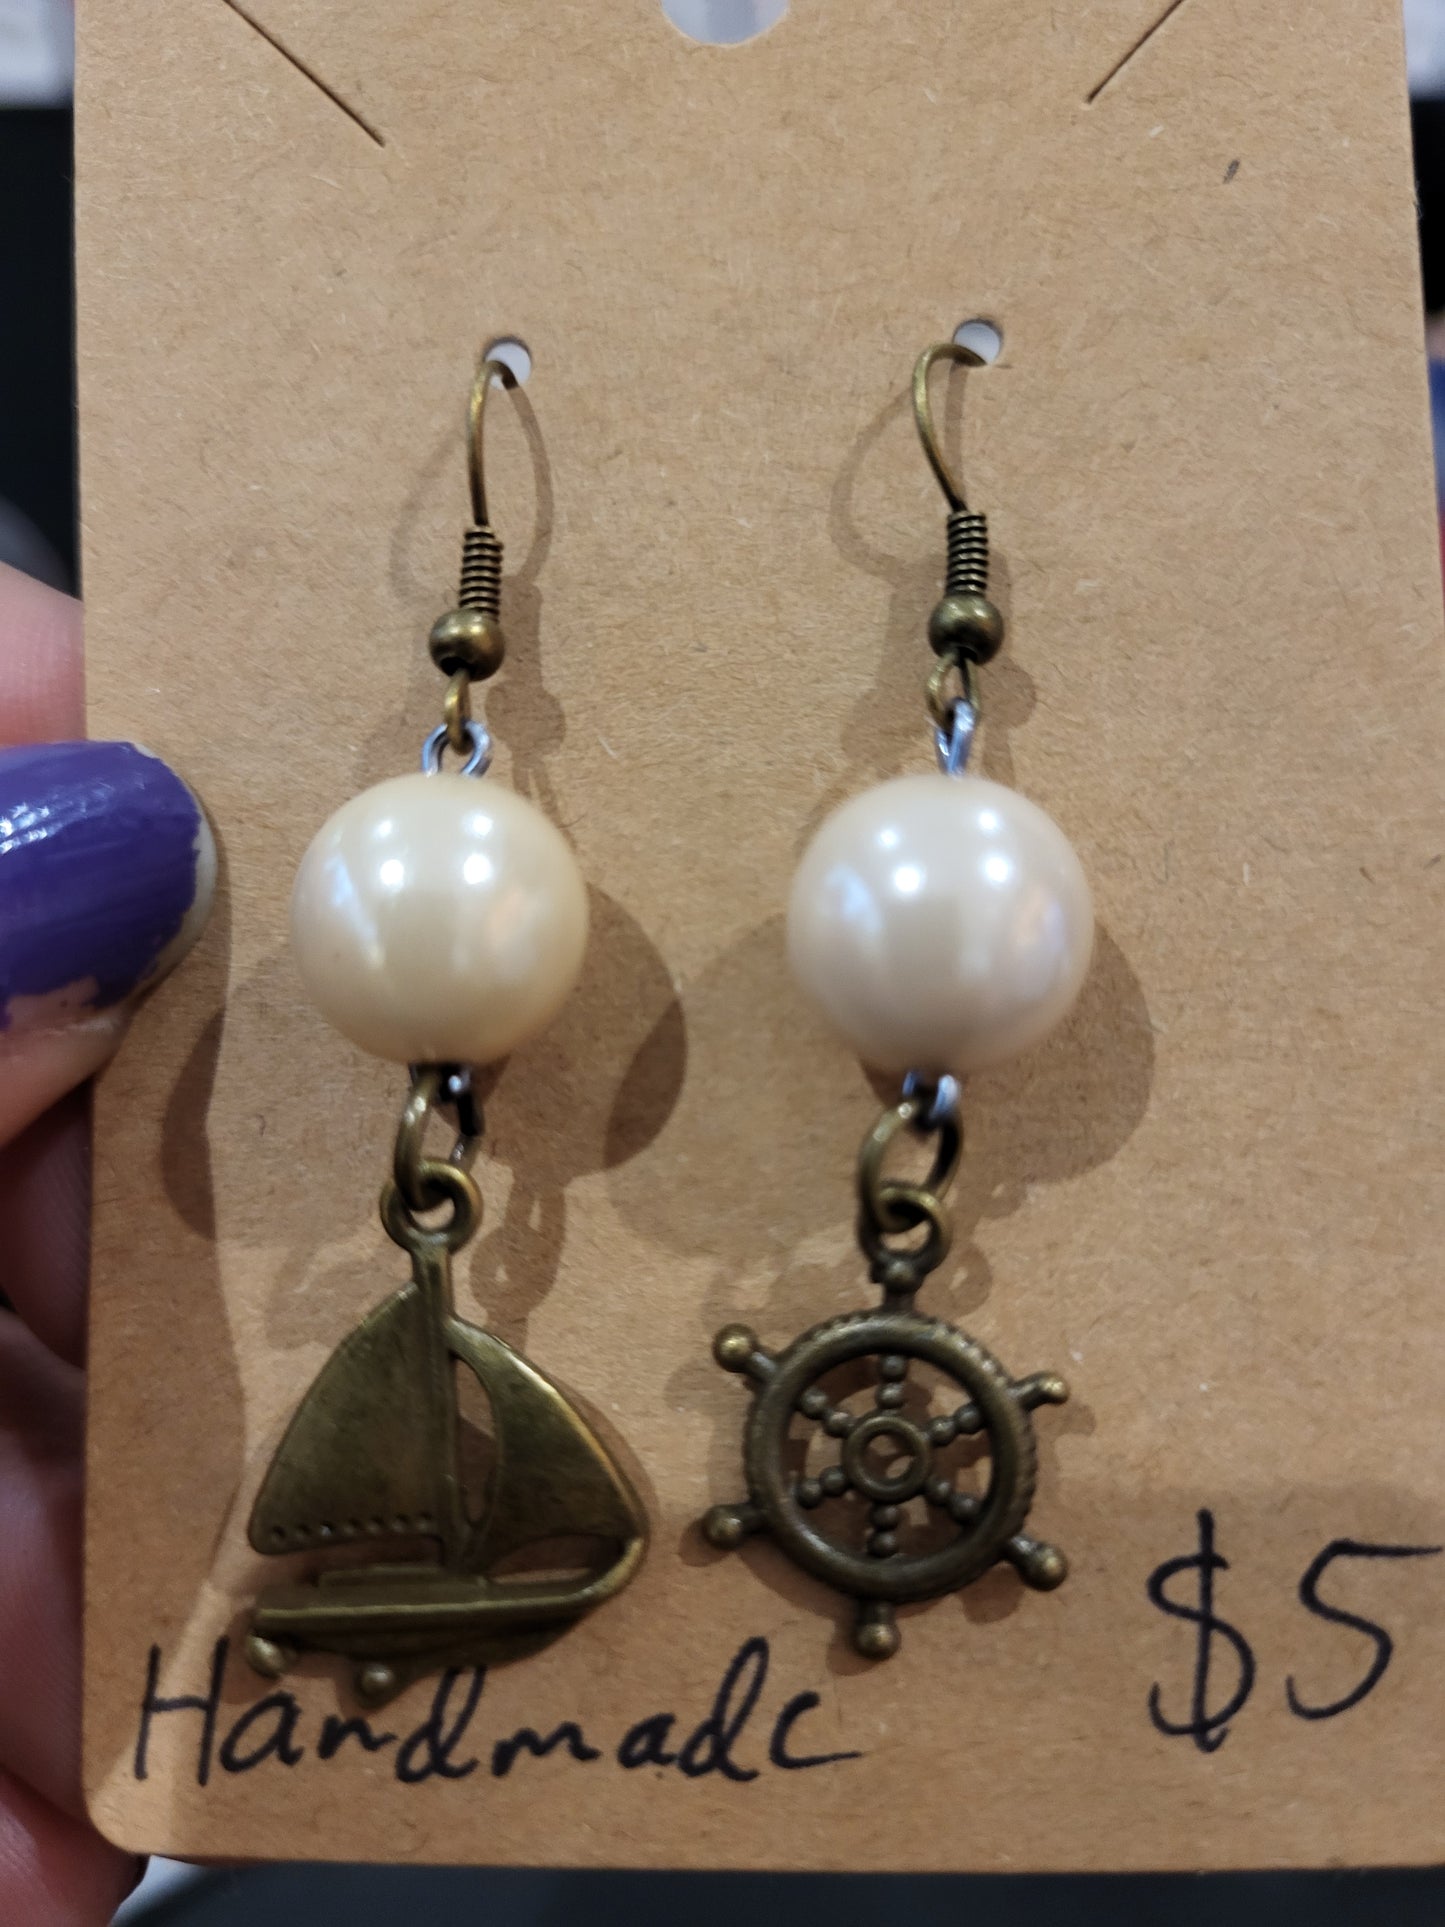 Handmade simple beige bead earrings with ship and wheel charms